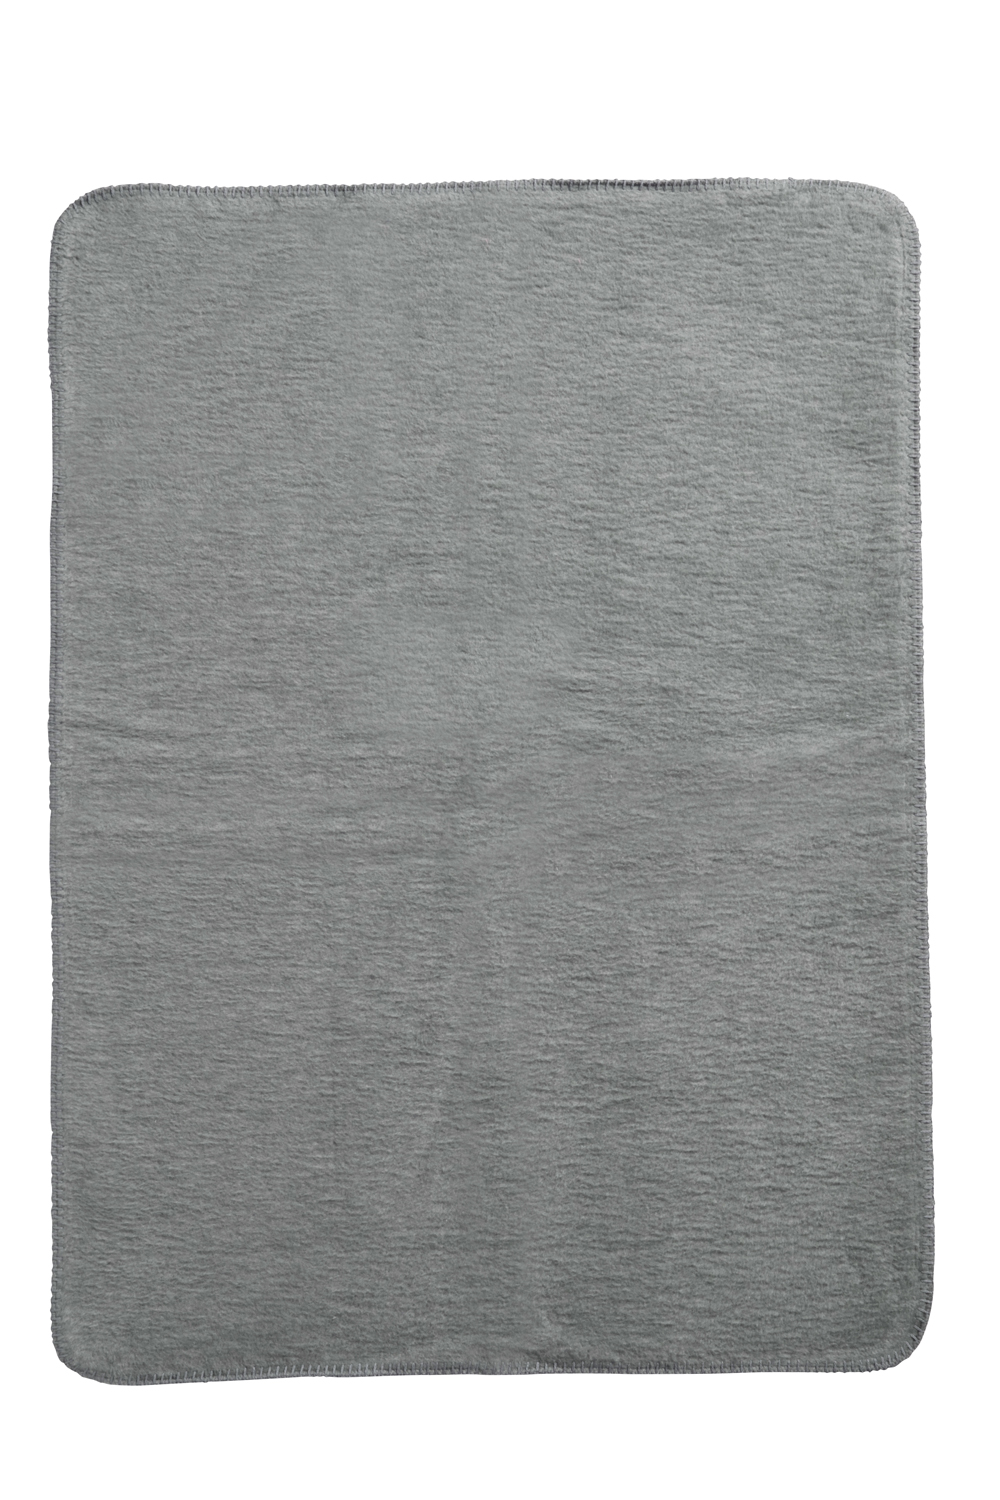 Ledikant deken Uni - grey - 100x150cm